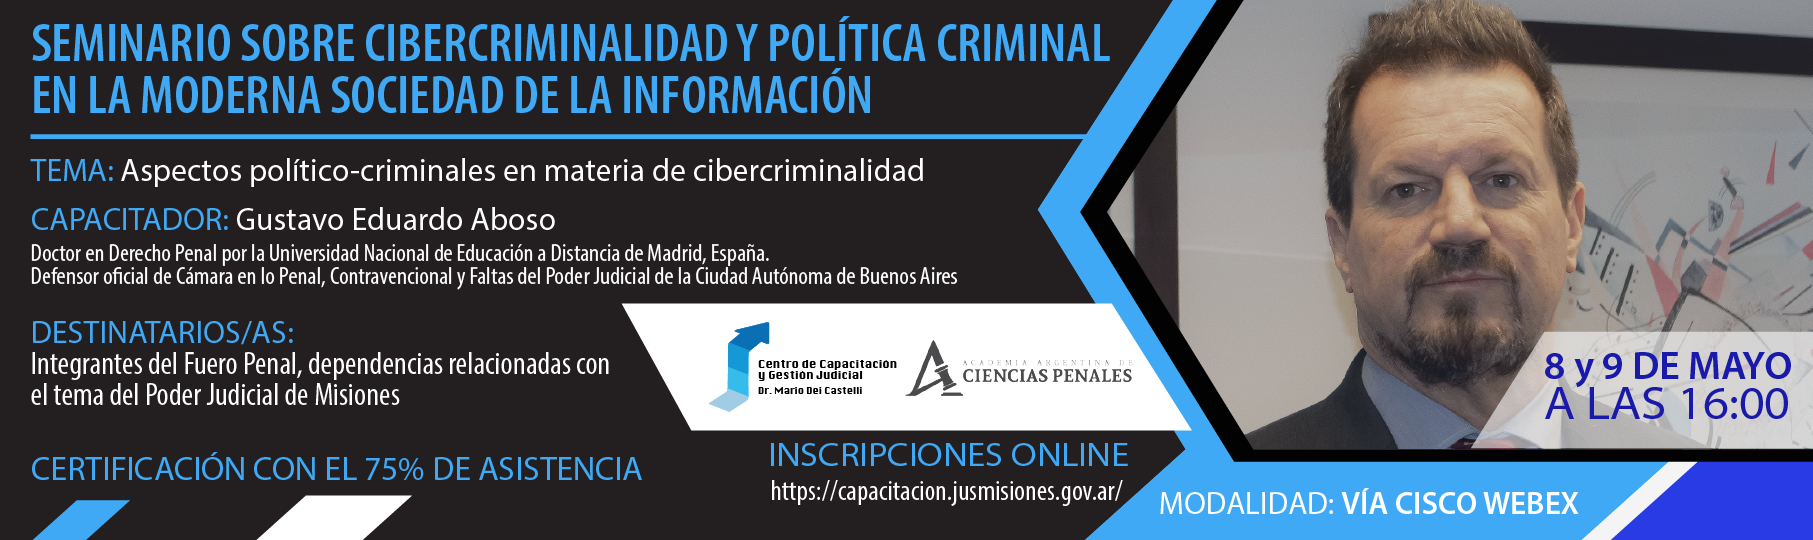 Cr3_P1_Seminario_sobre_Cibercriminalidad-01